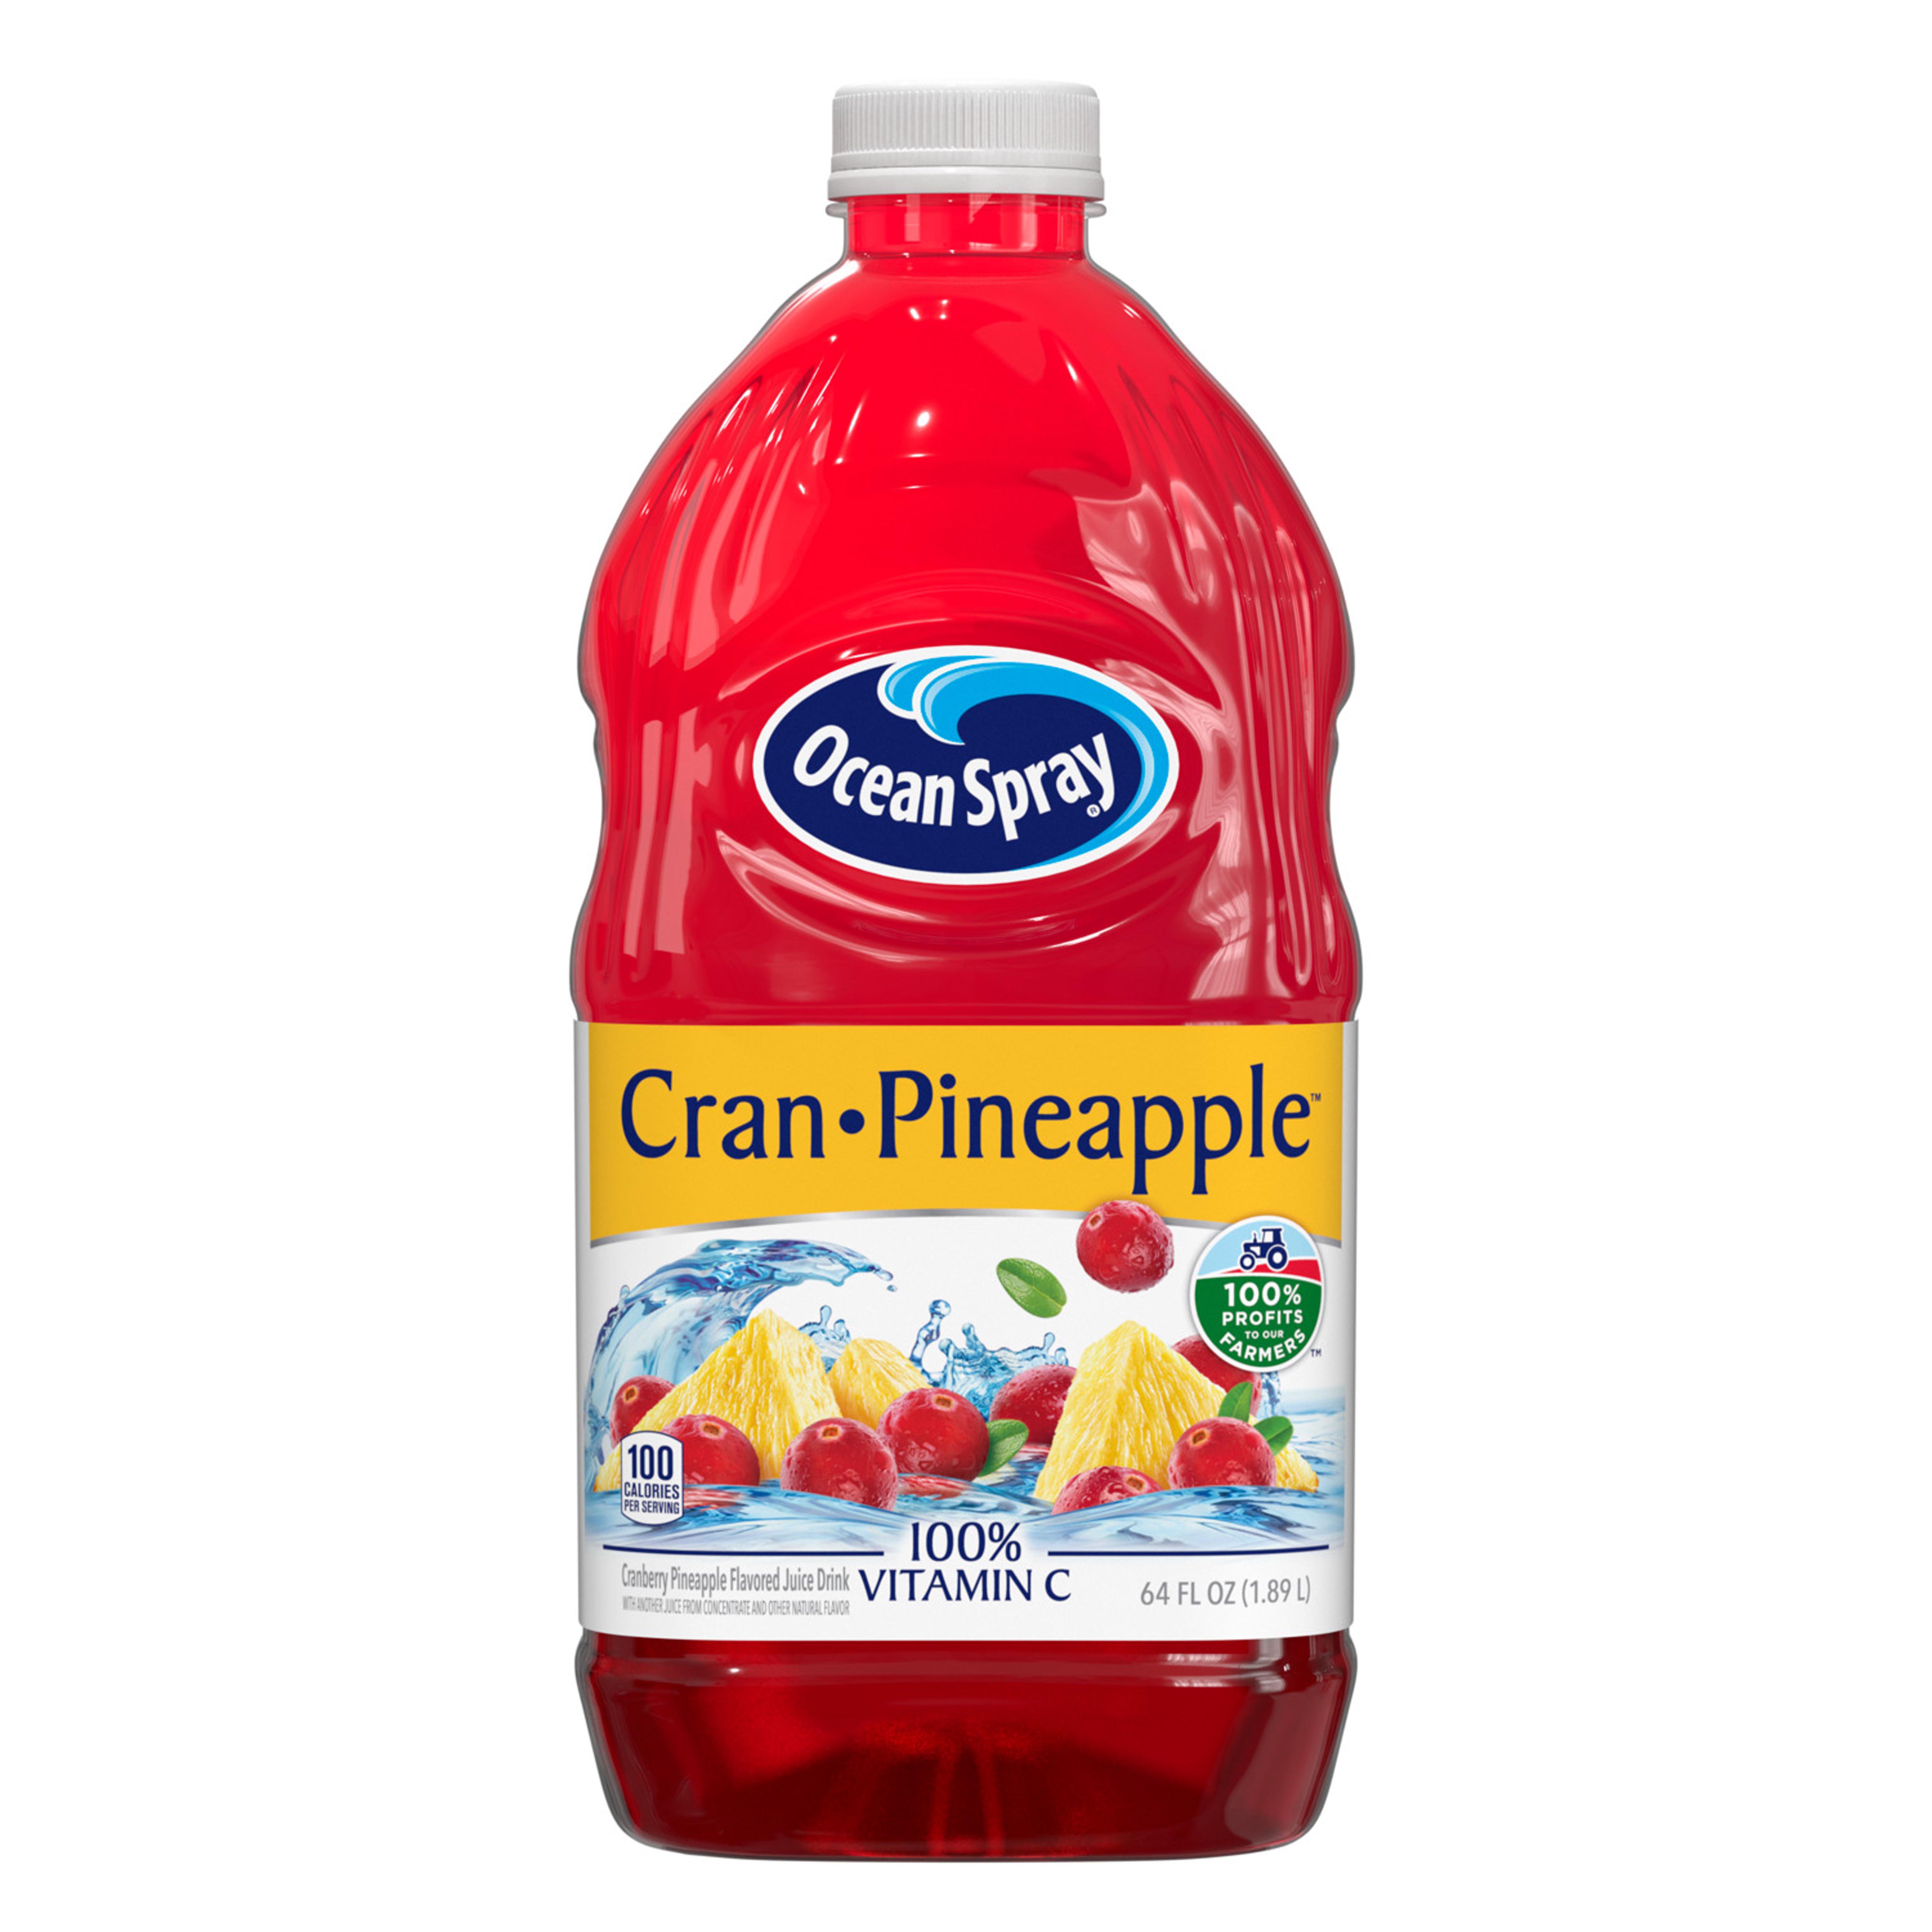 Ocean Spray Cran-Pineapple Juice Drink - Shop Juice at H-E-B